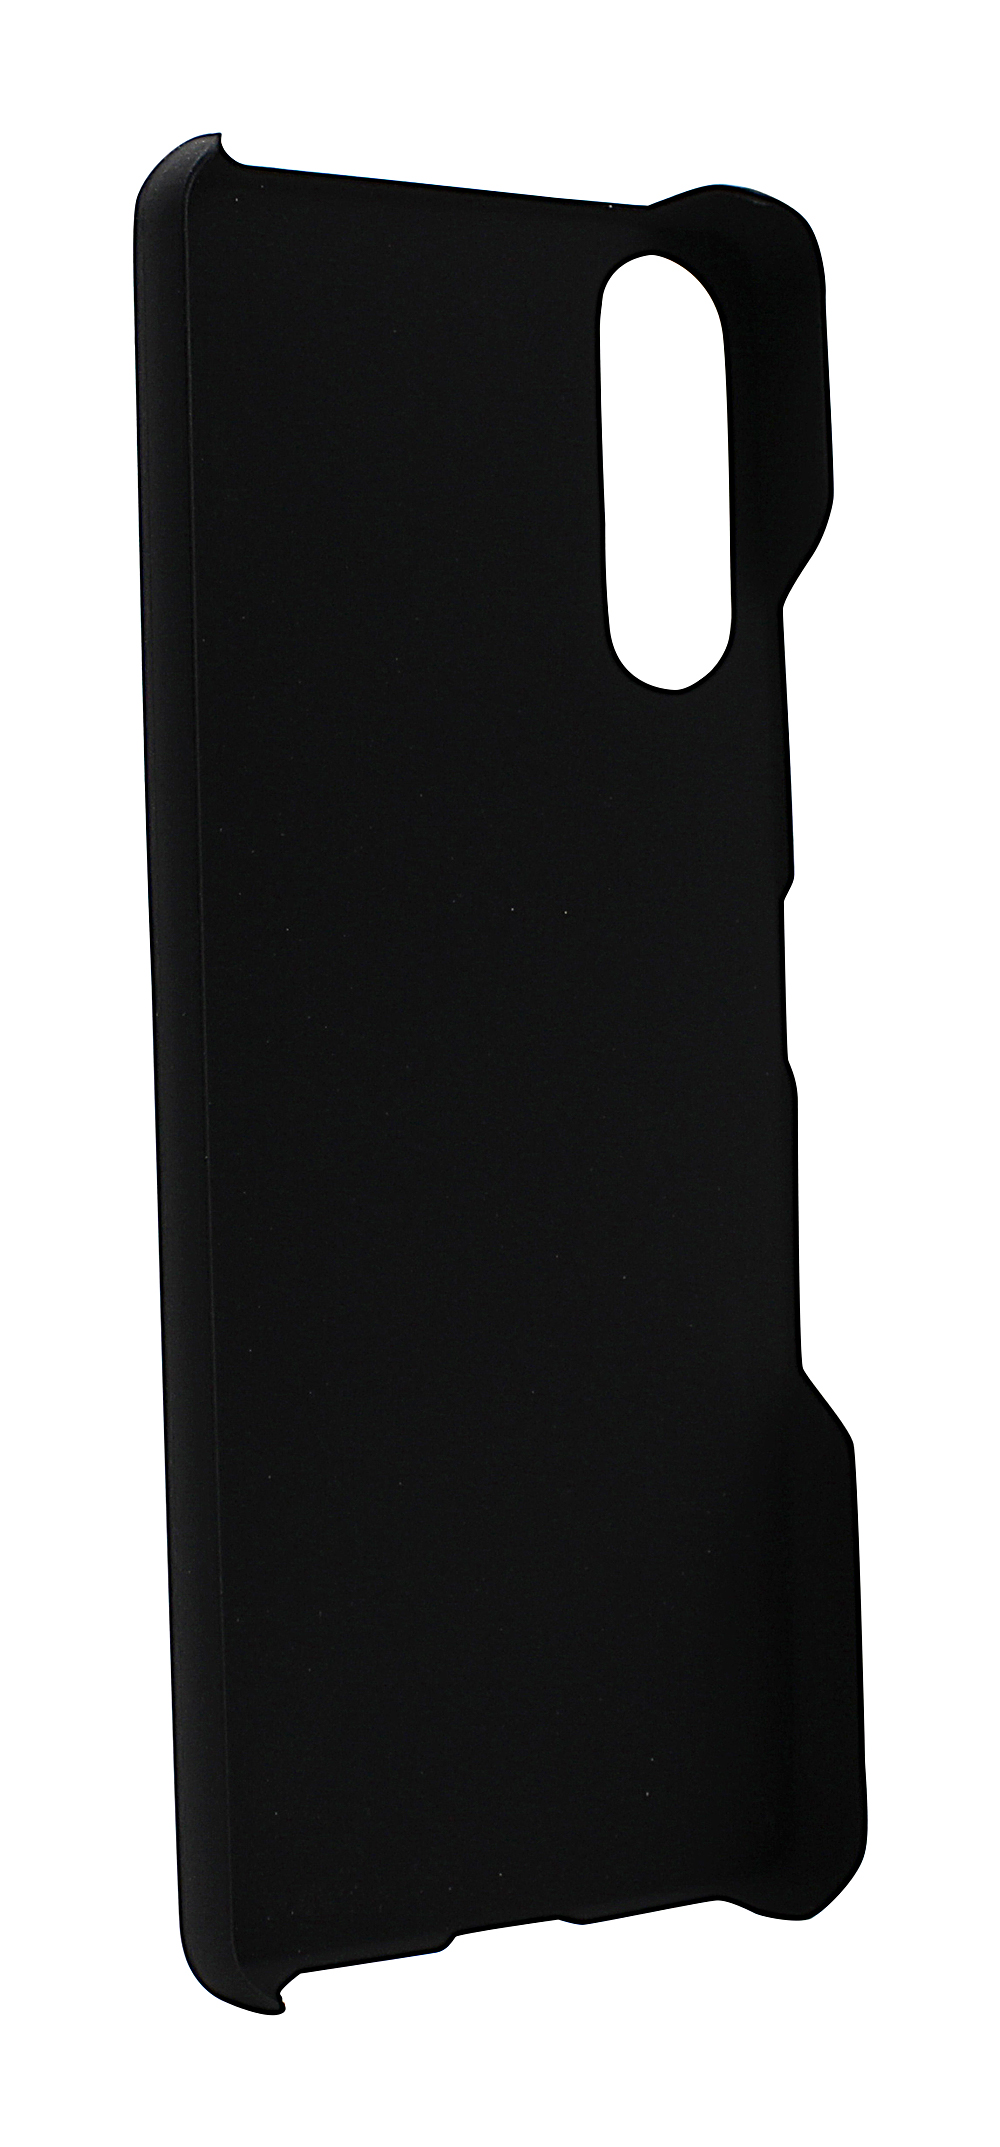 Skimblocker Magnet Designwallet Sony Xperia 10 III (XQ-BT52)